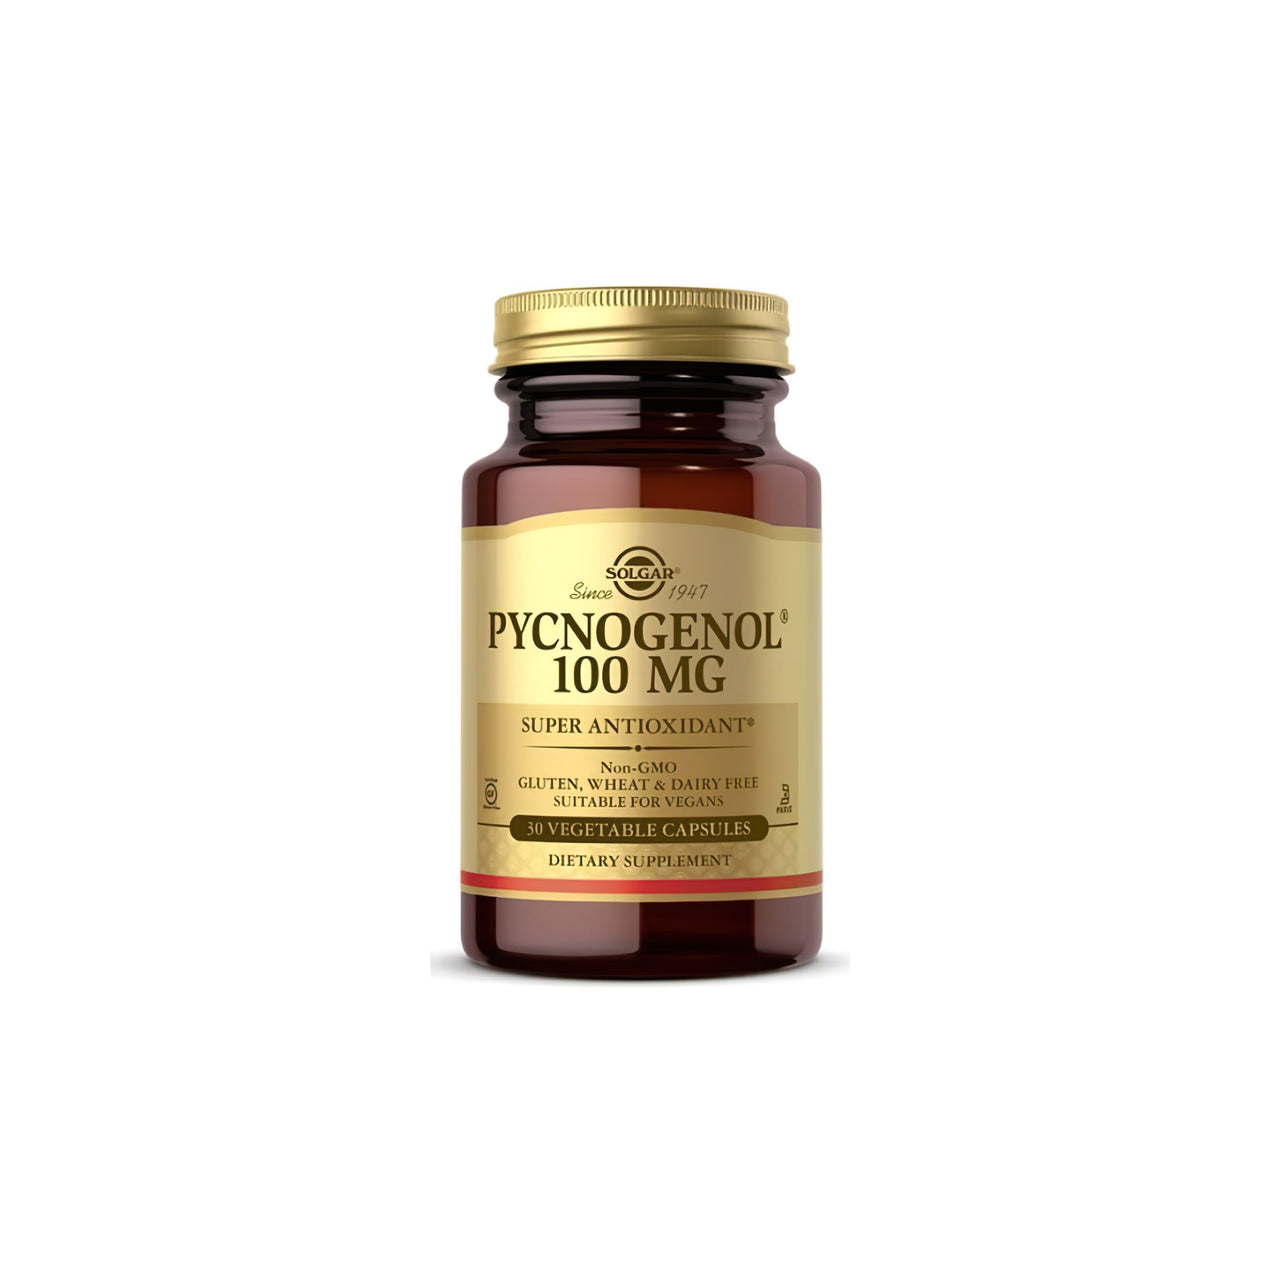 A bottle of Solgar Pycnogenol 100 mg 30 vege capsules, promoting circulatory system and brain health.